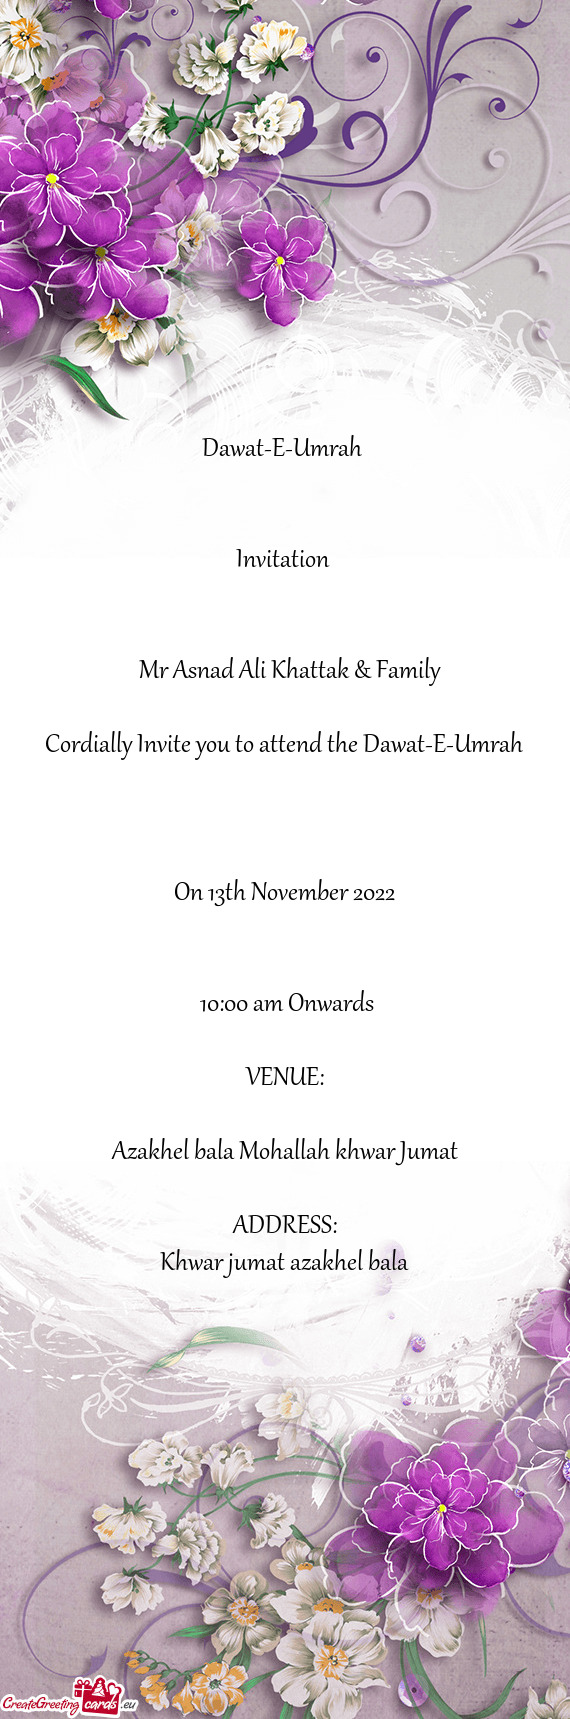 Mr Asnad Ali Khattak & Family